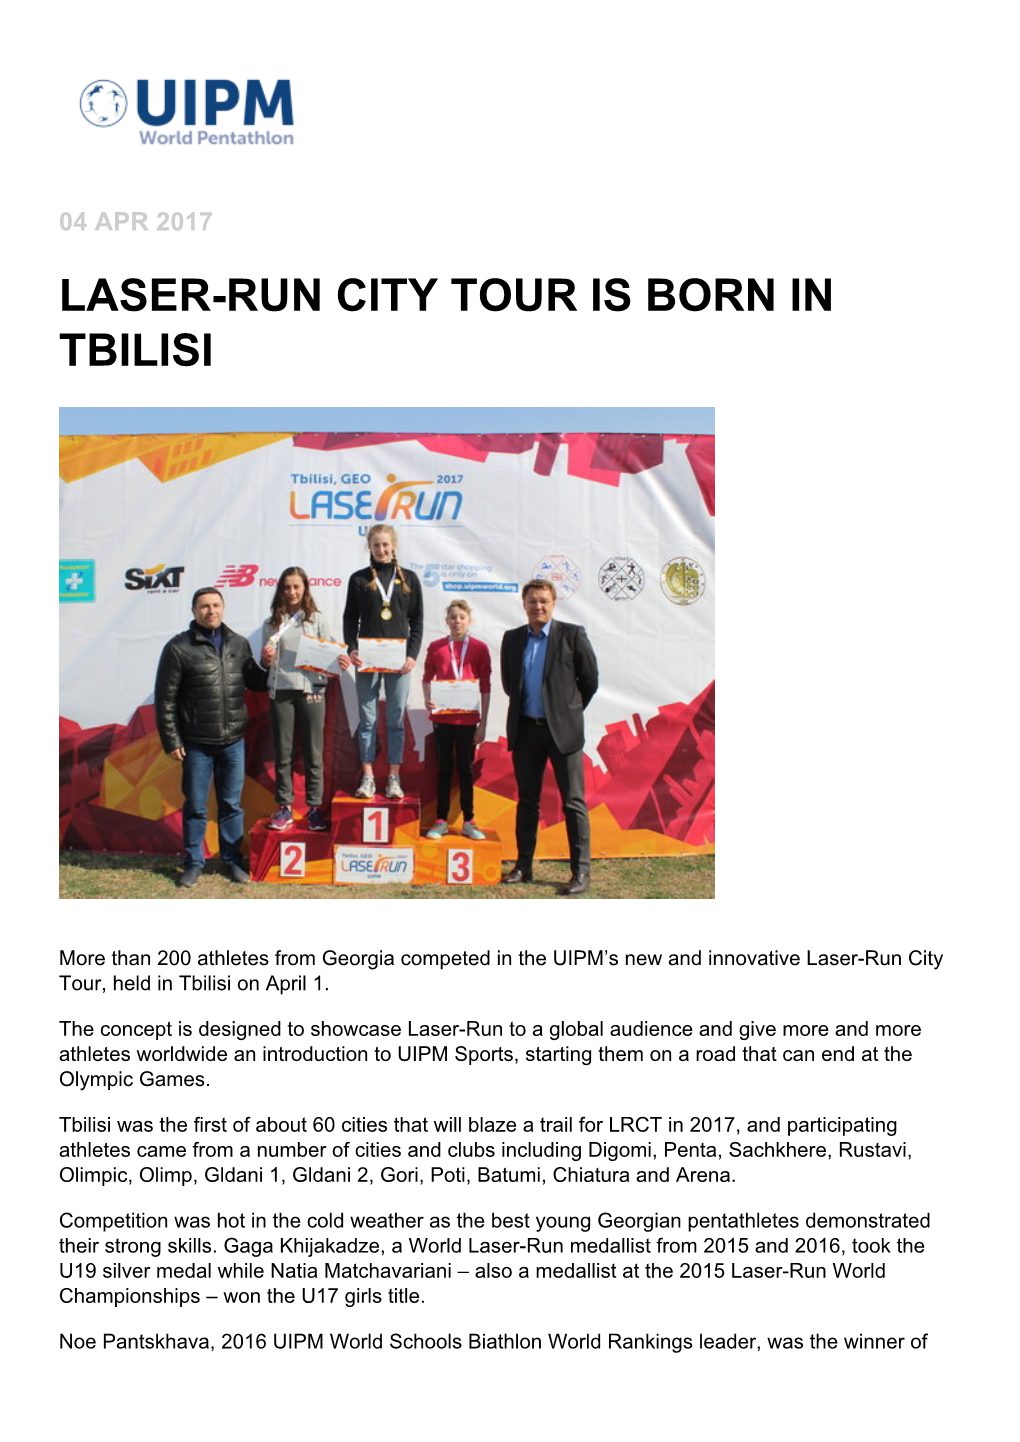 Laser-Run City Tour Is Born in Tbilisi